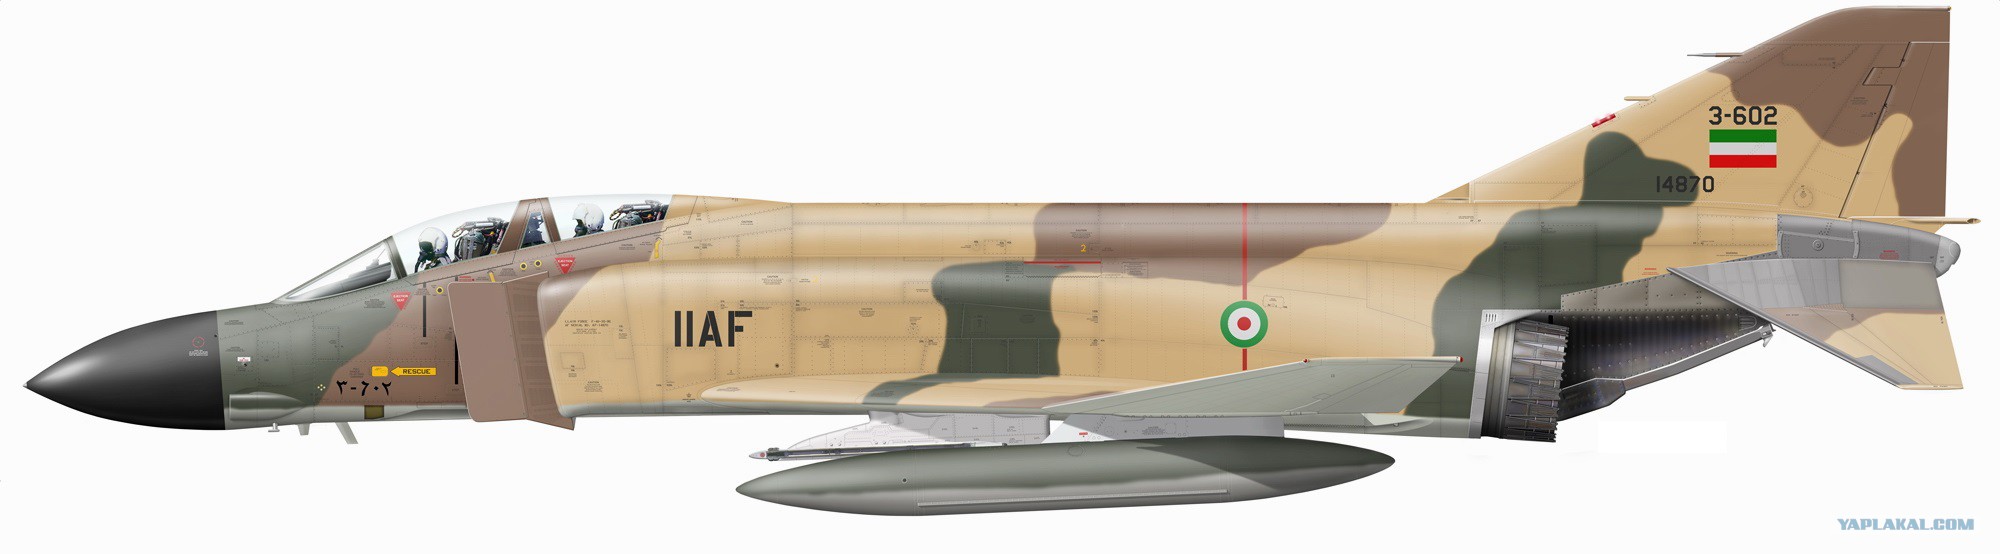 F 4.0 5.6. F-4 Phantom сбоку. Ф4 Фантом 2. F4 Phantom ВВС Ирана. F-4 Phantom II сбоку.